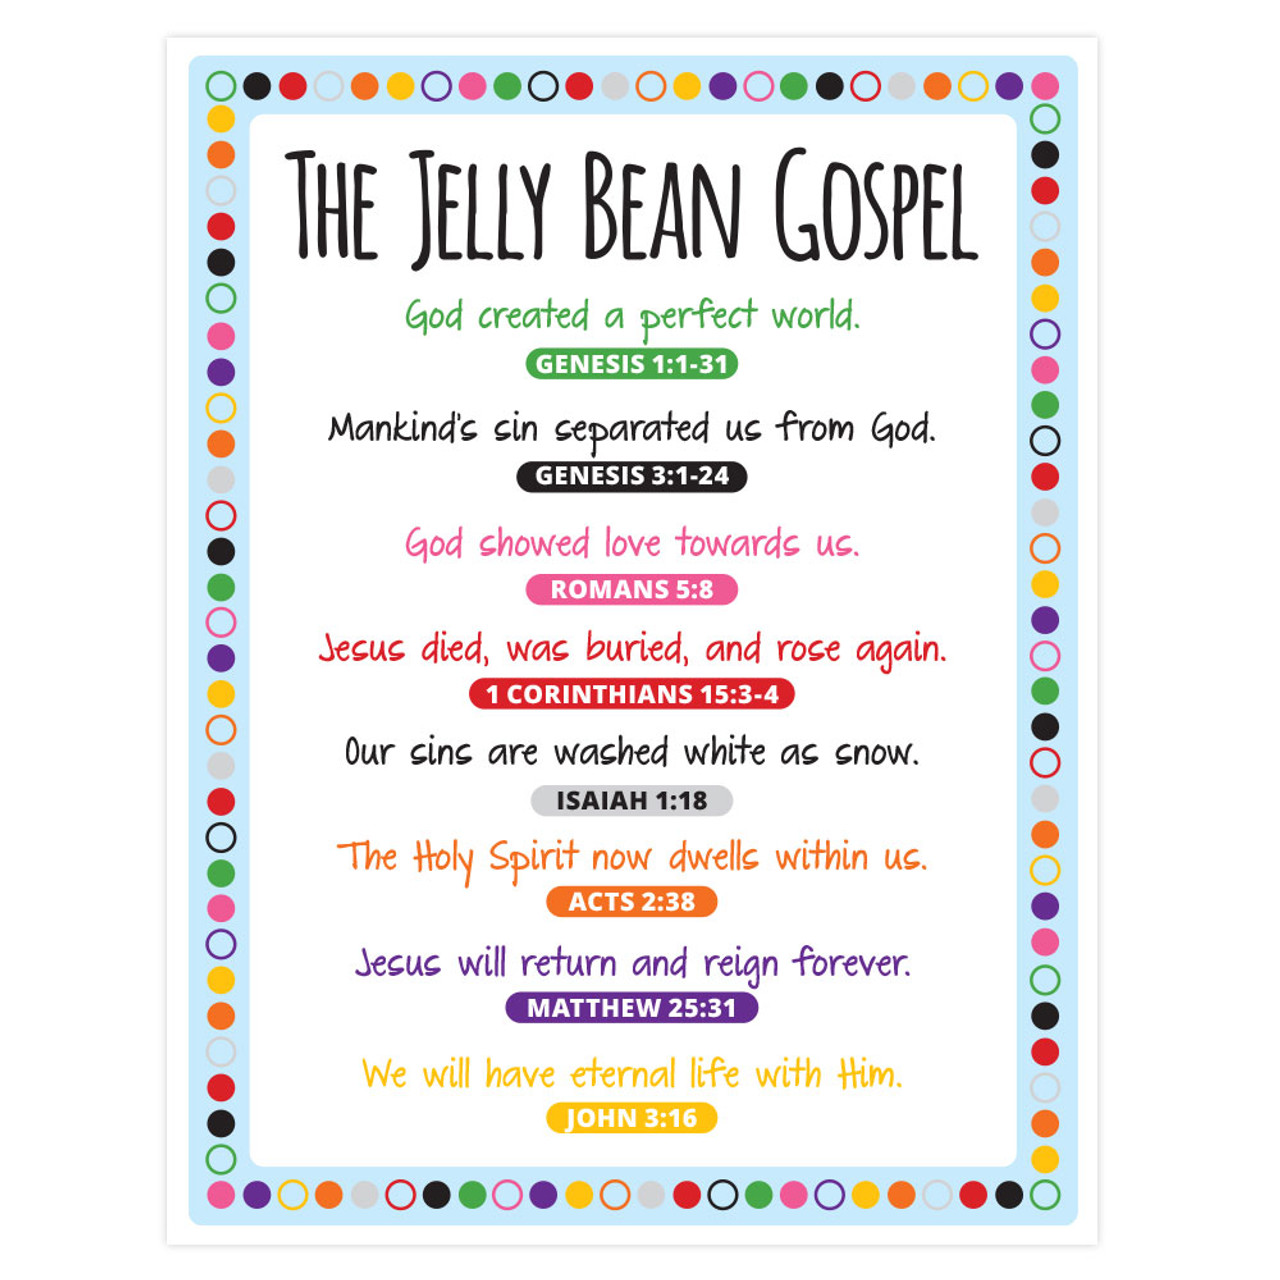 jelly bean prayer